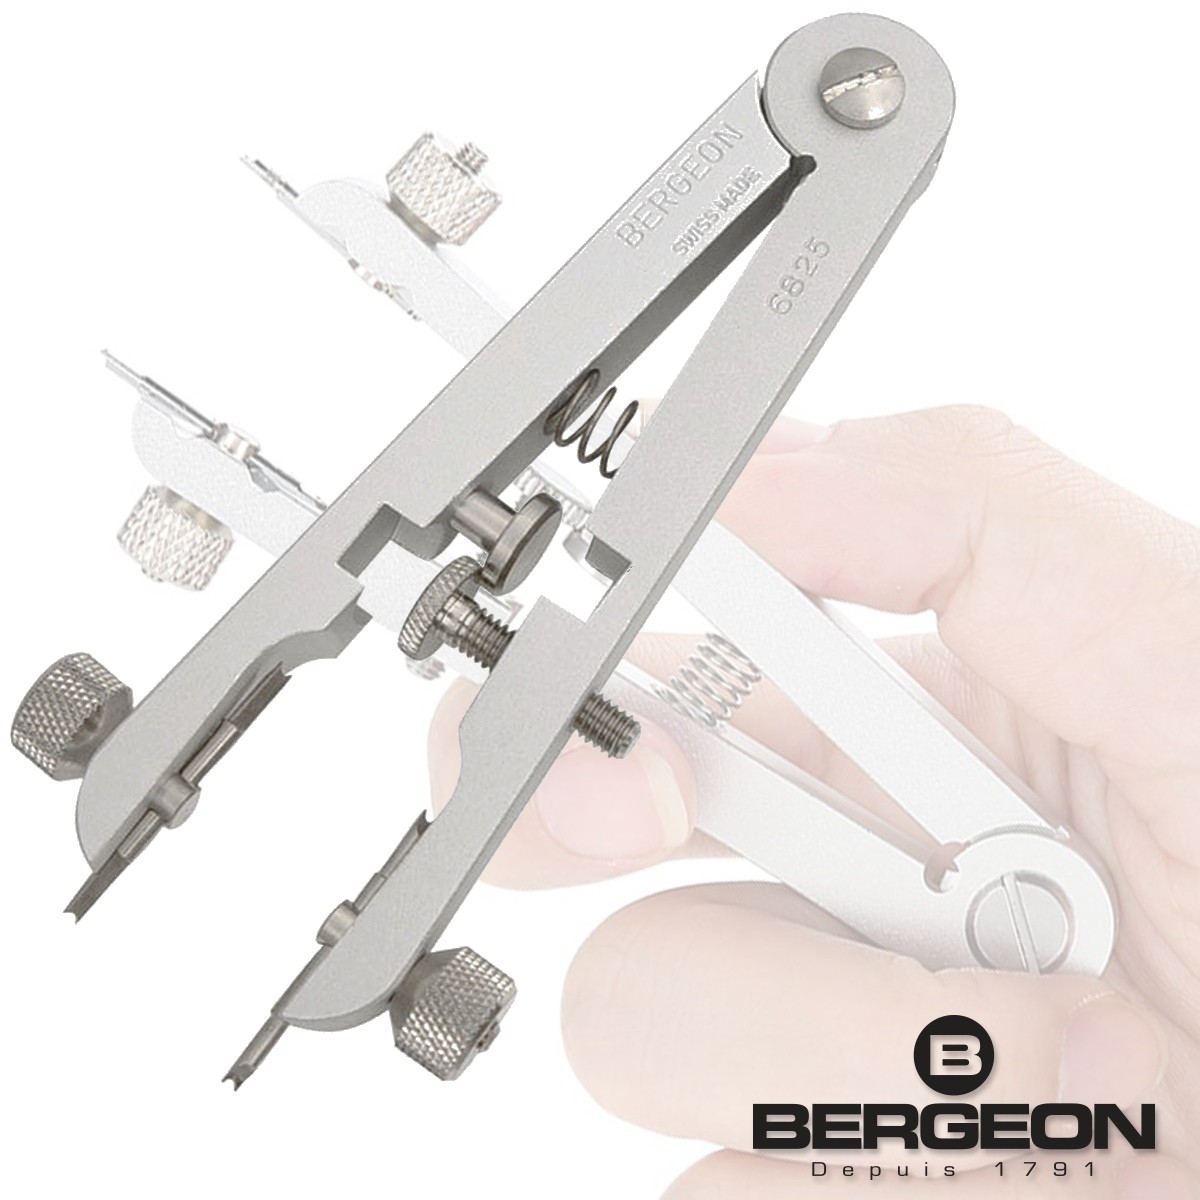 Bergeon 6825-VAR watch band tool / spring bar plier - watch tool